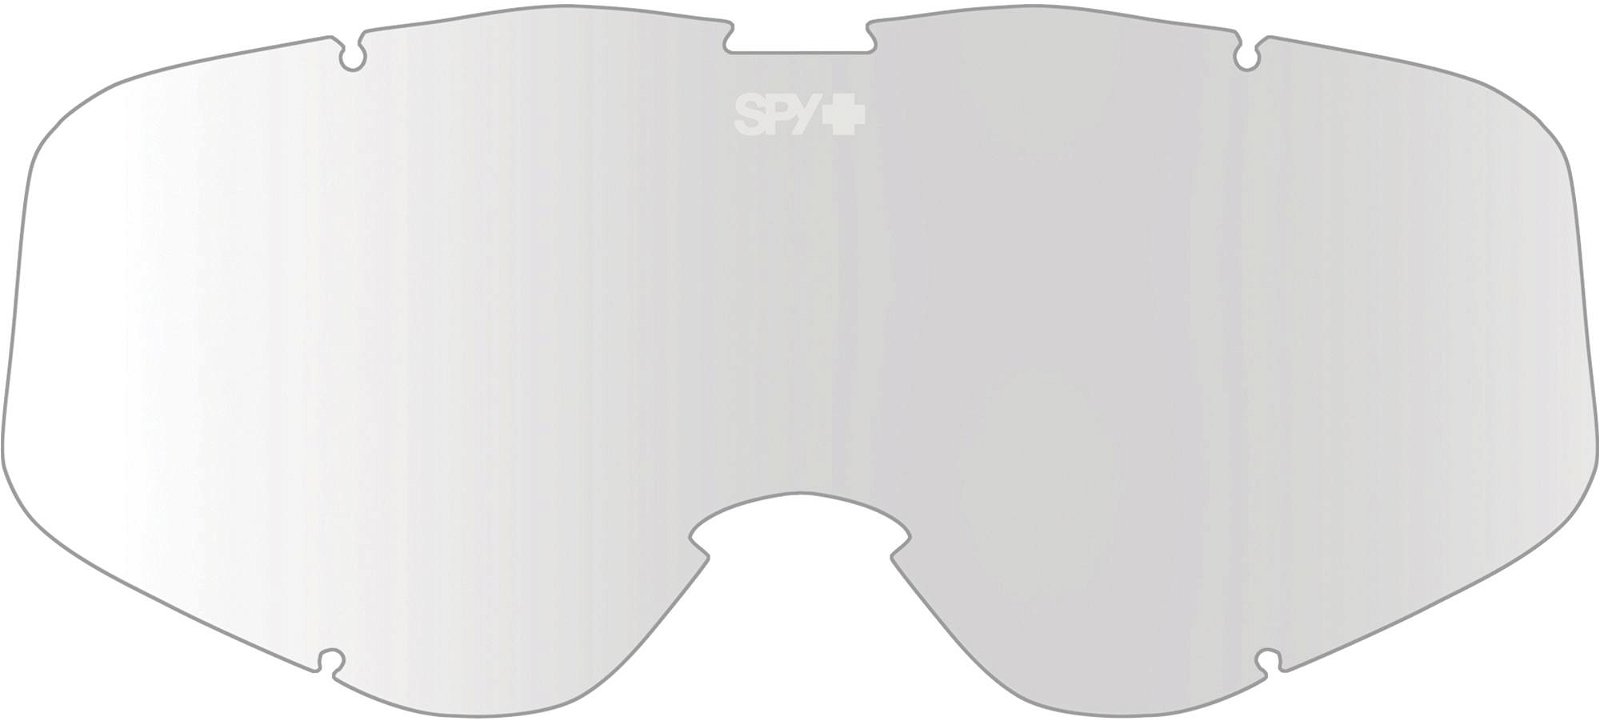 Spy Cadet Replacement Lens